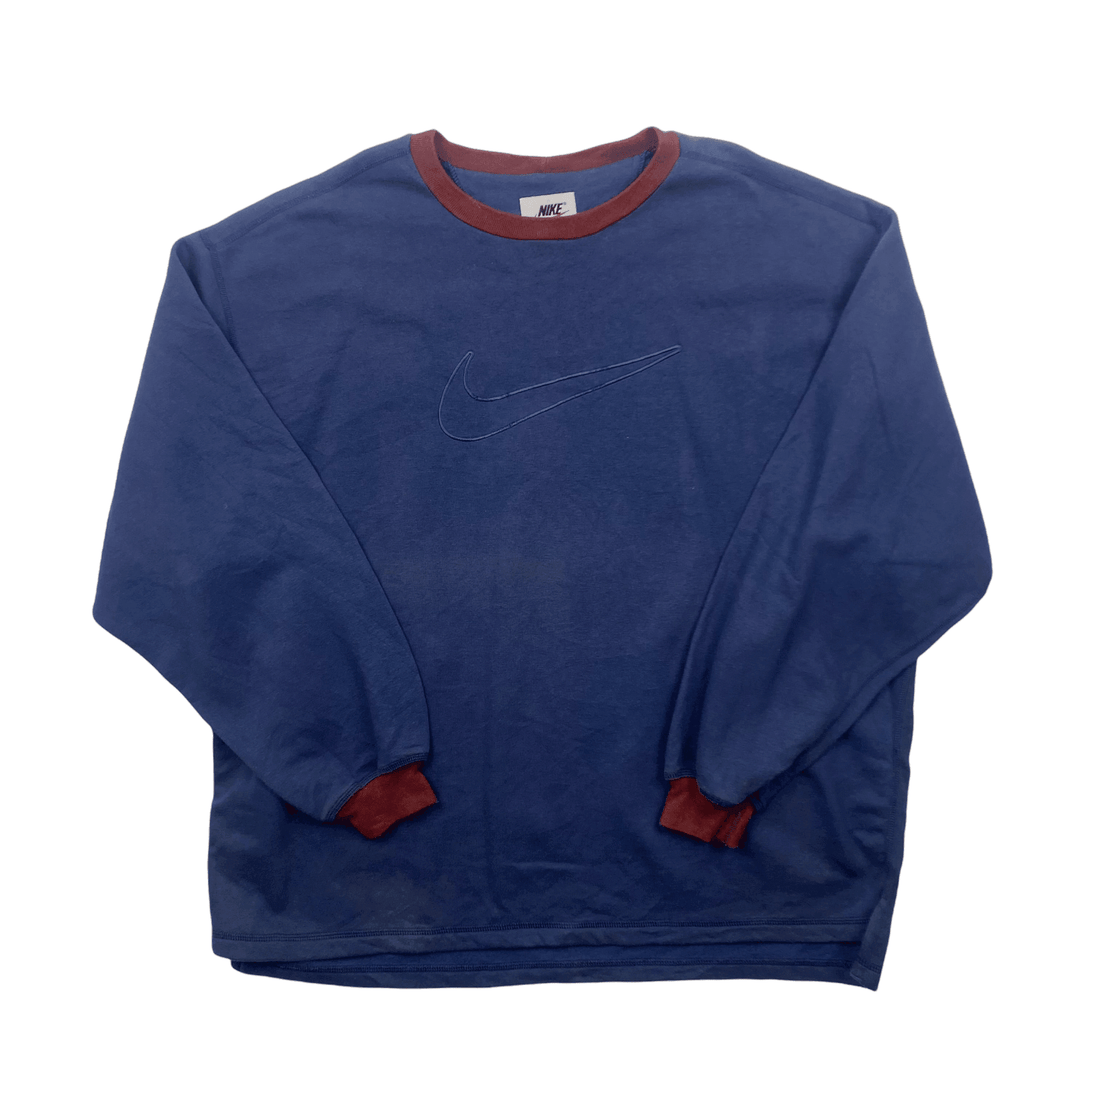 Vintage 90s Navy Blue + Red Nike Large Centre Swoosh Sweatshirt - Extra Large - The Streetwear Studio